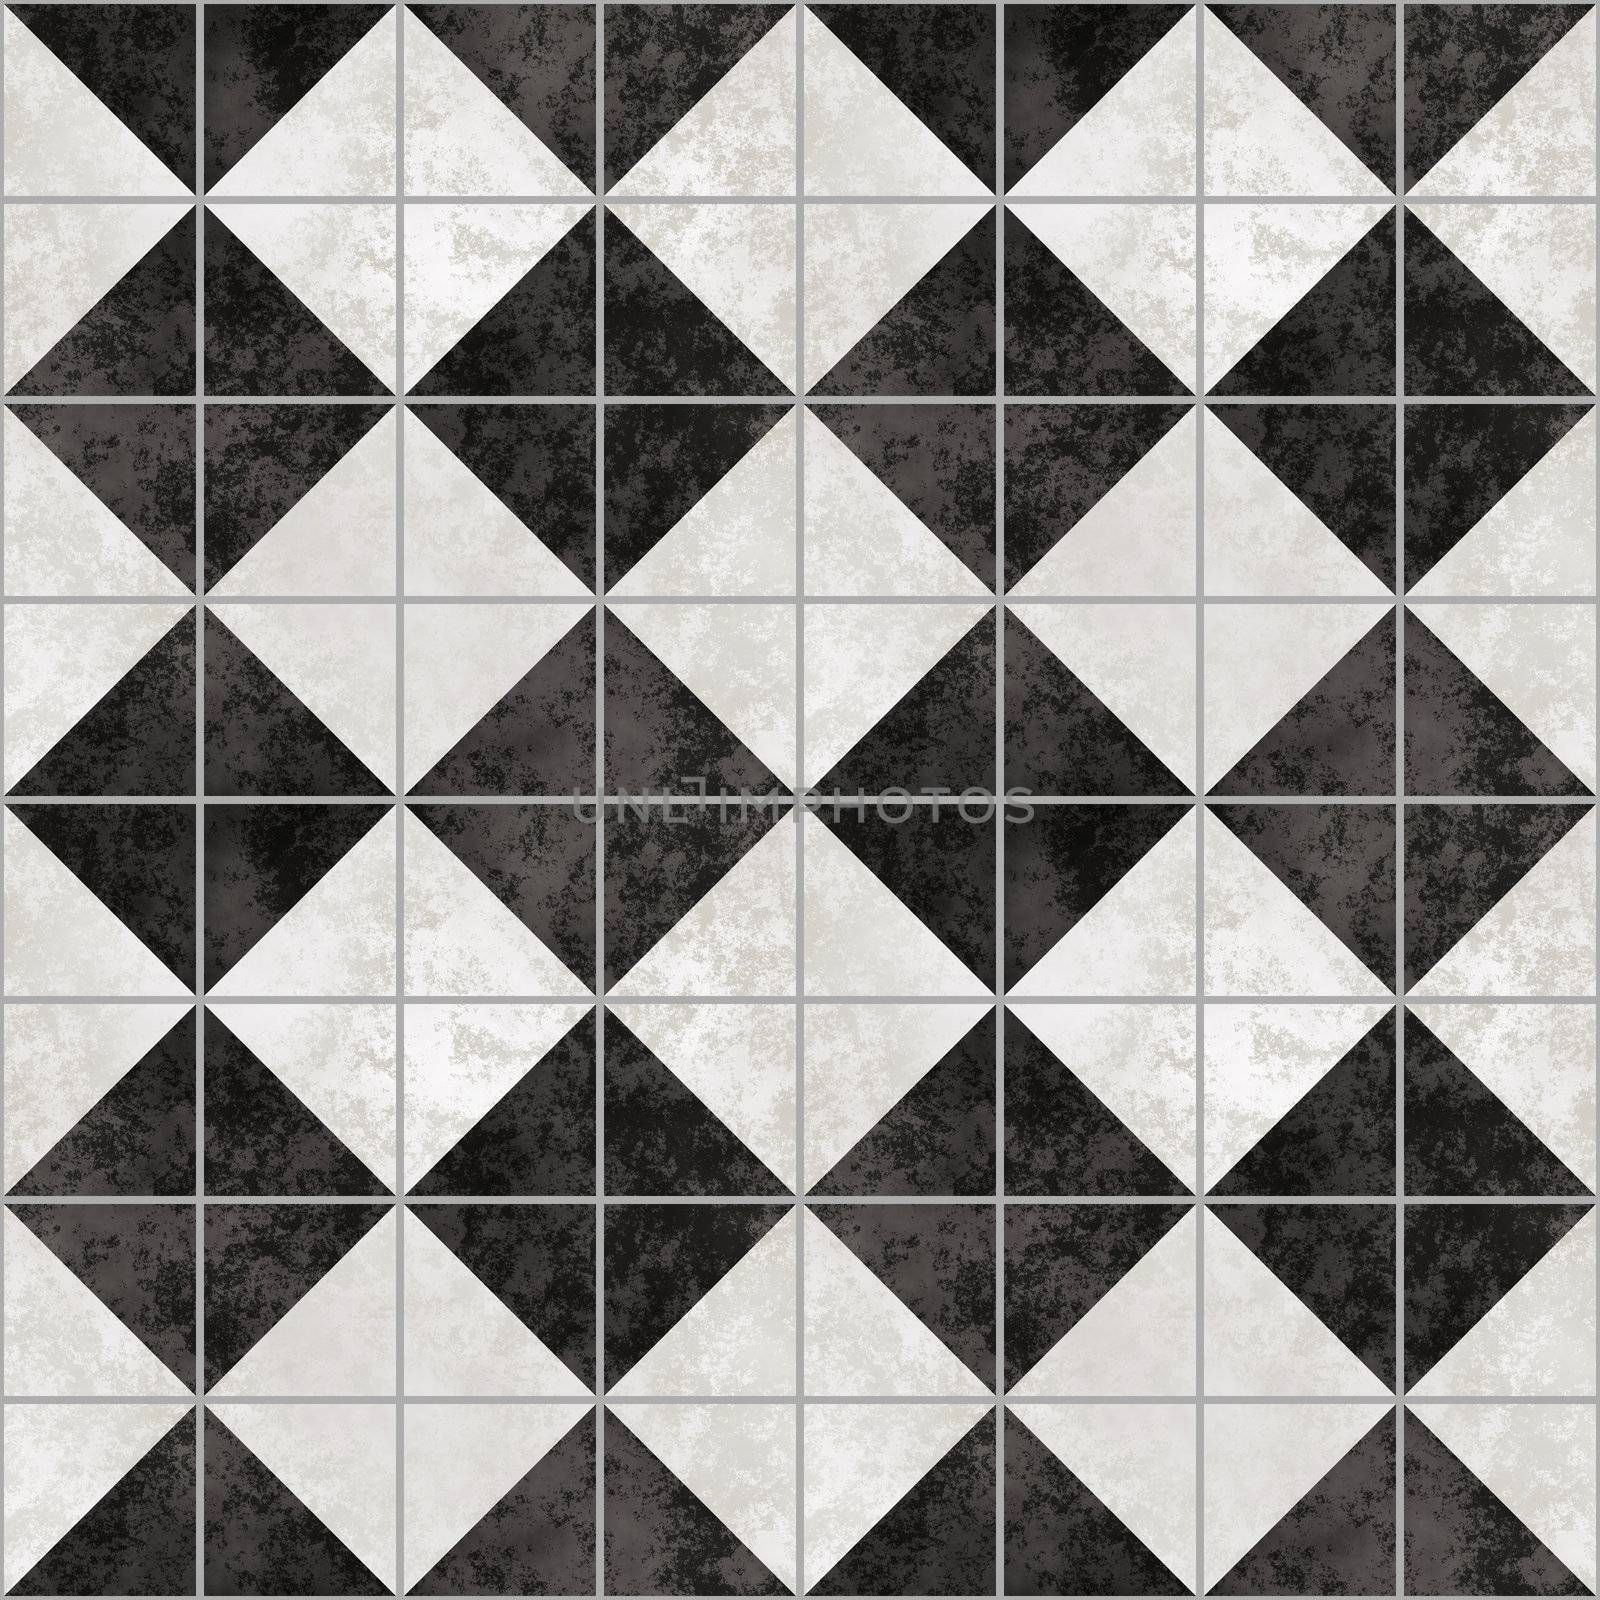 marble floor by clearviewstock